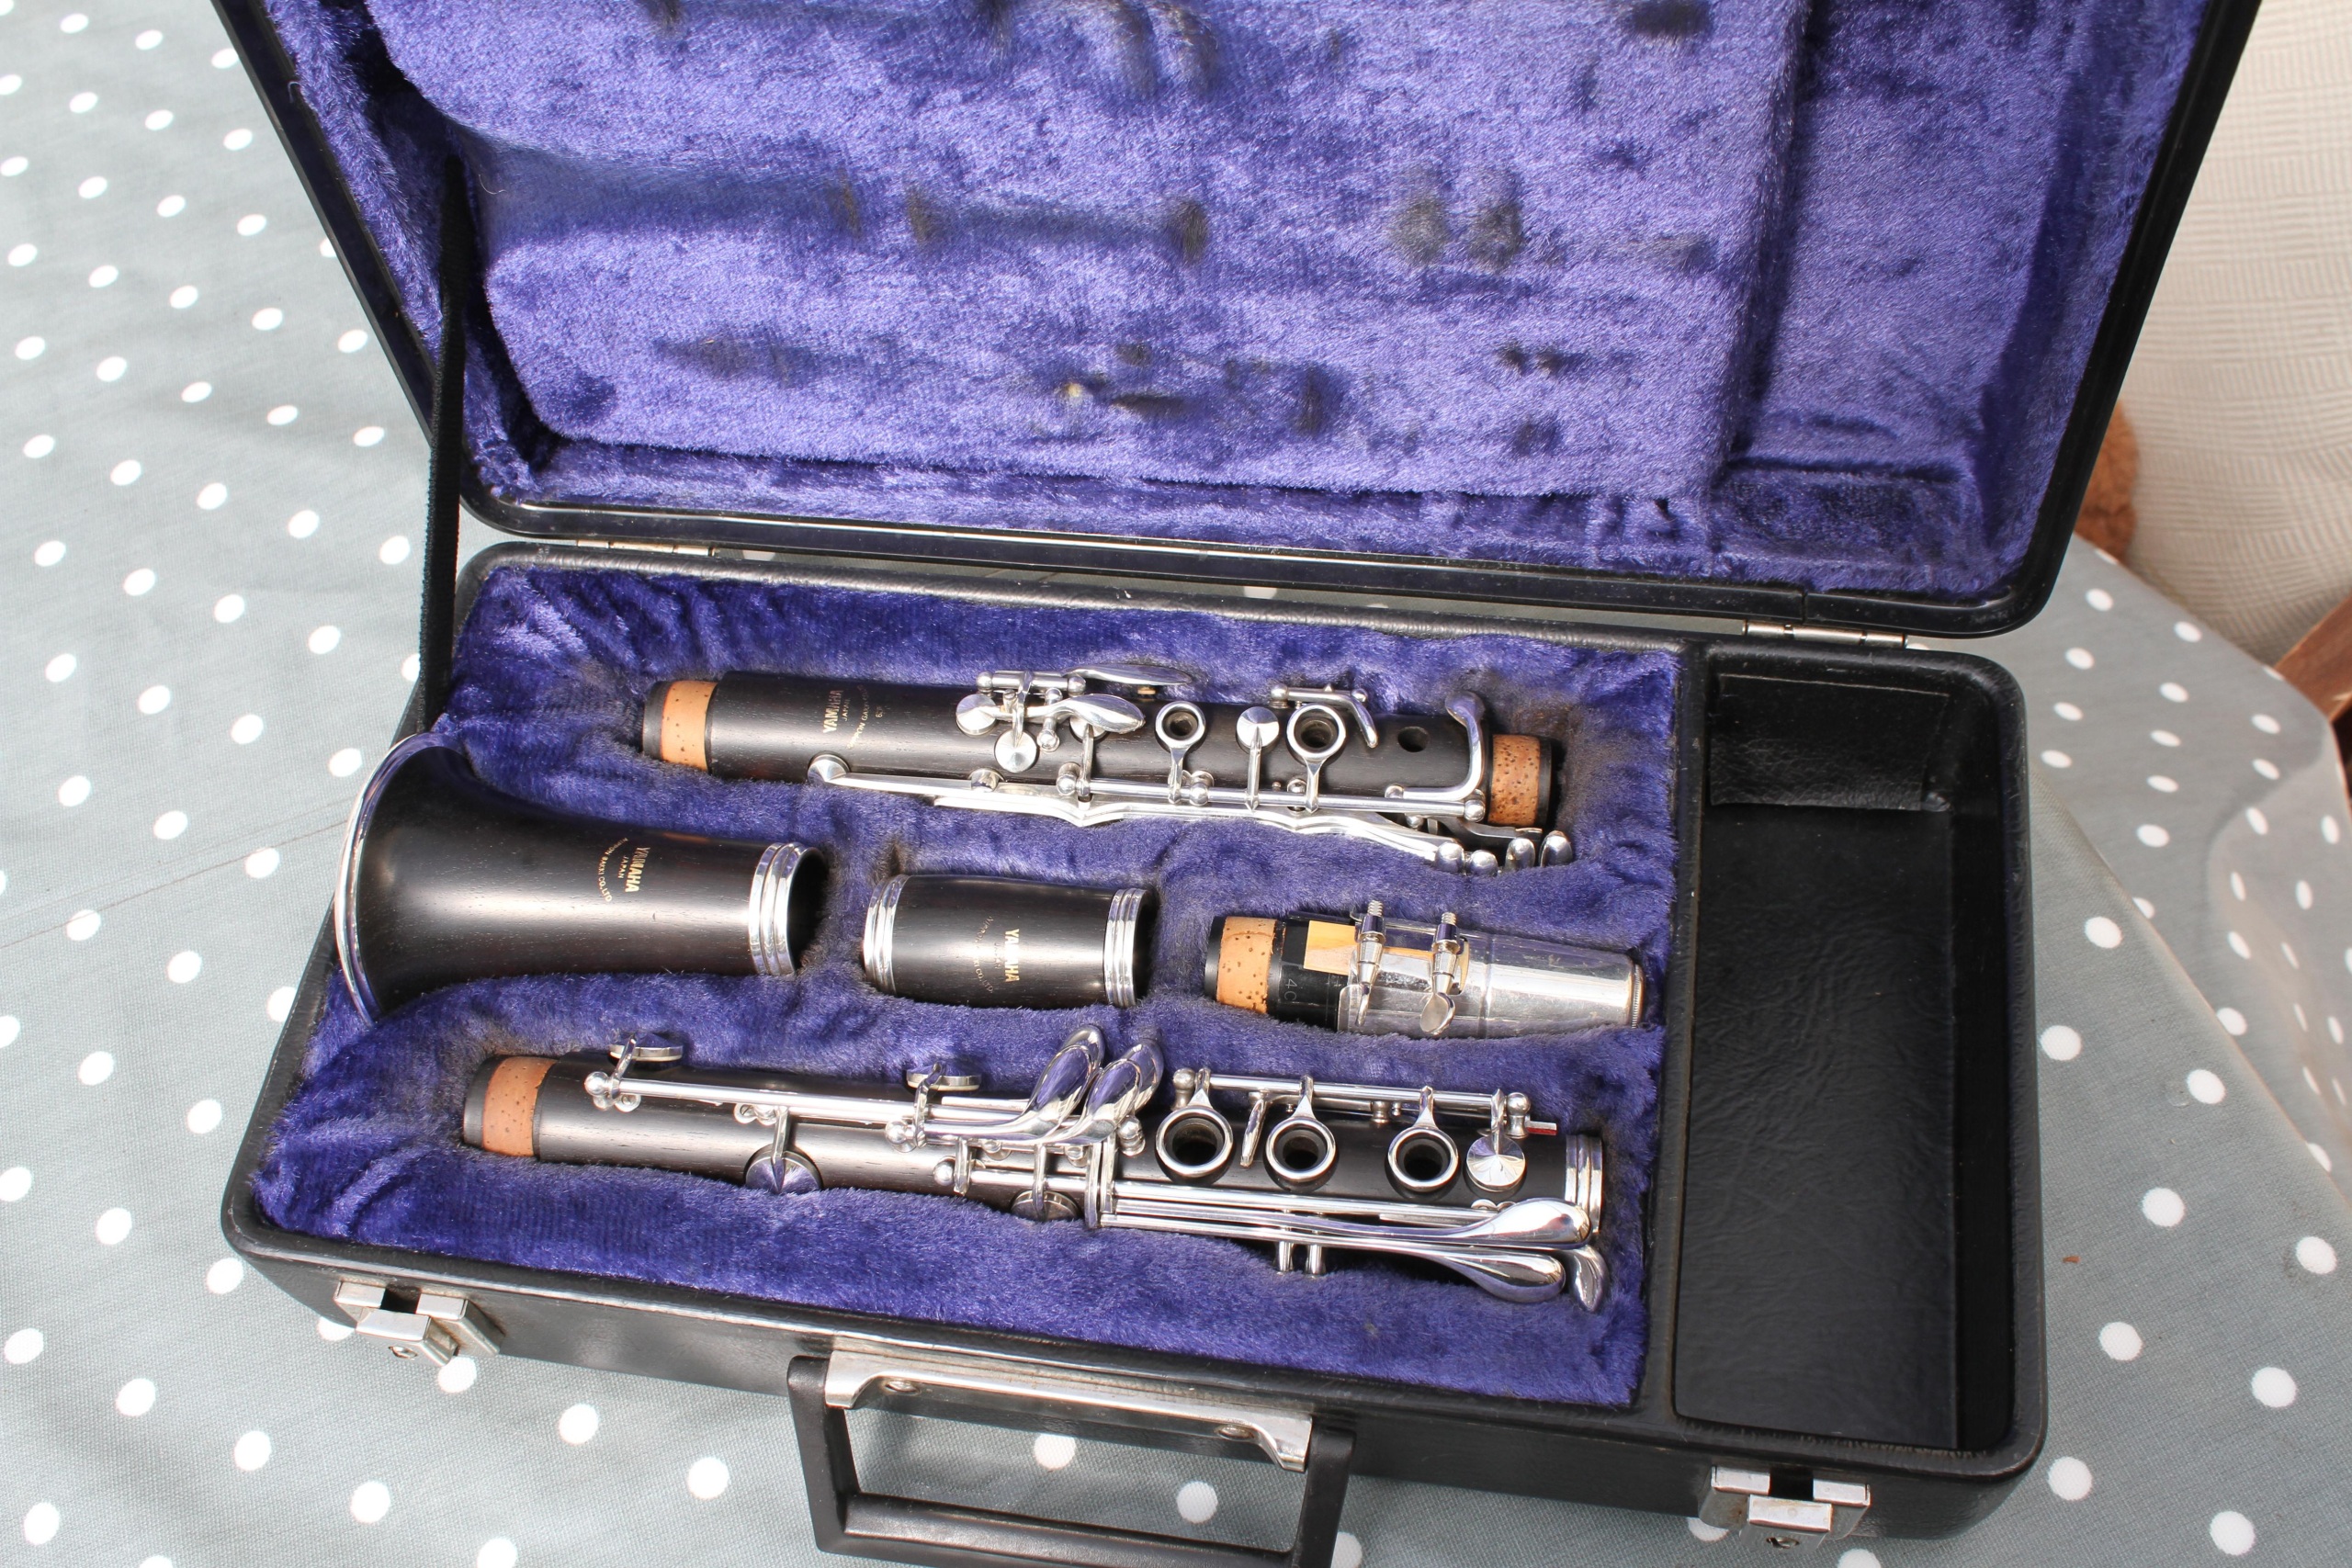 Yamaha YCL62 clarinet